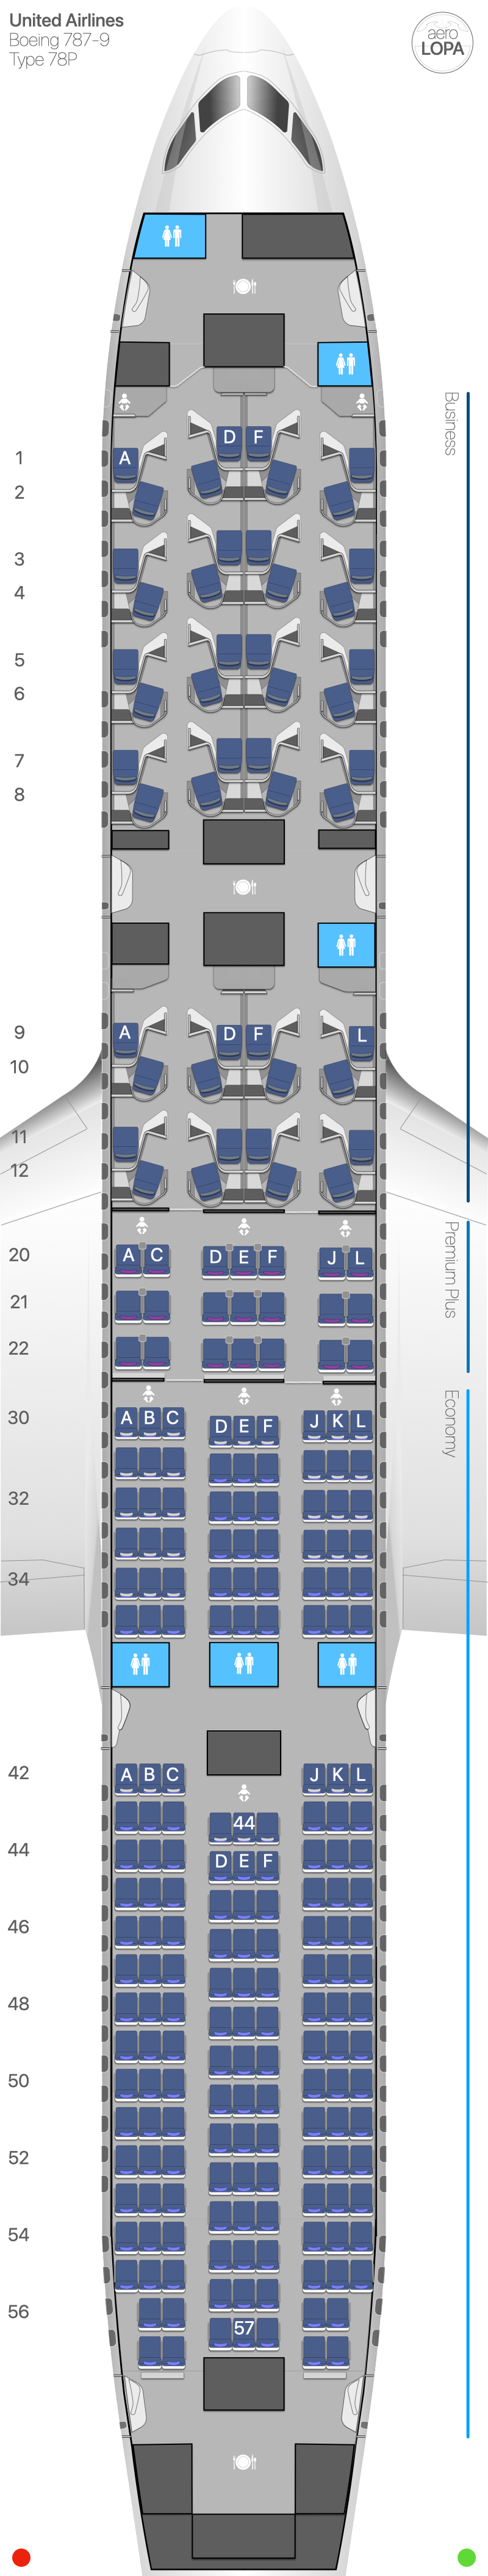 UA Boeing 787-9 type 78P - aeroLOPA | Detailed aircraft seat plans